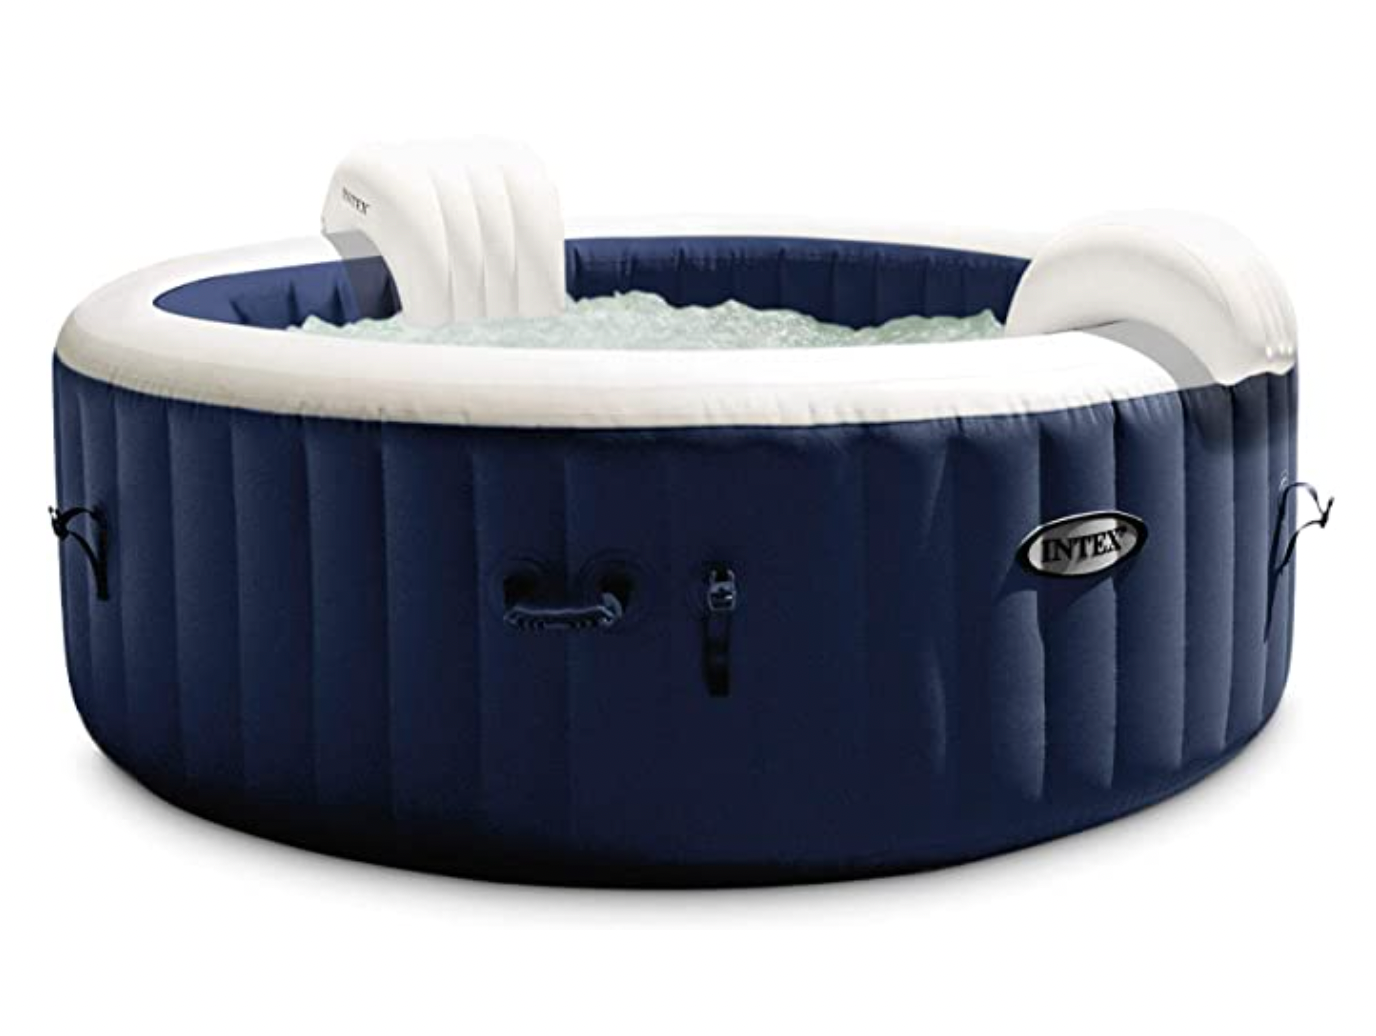 Intex Portable Inflatable Hot Tub